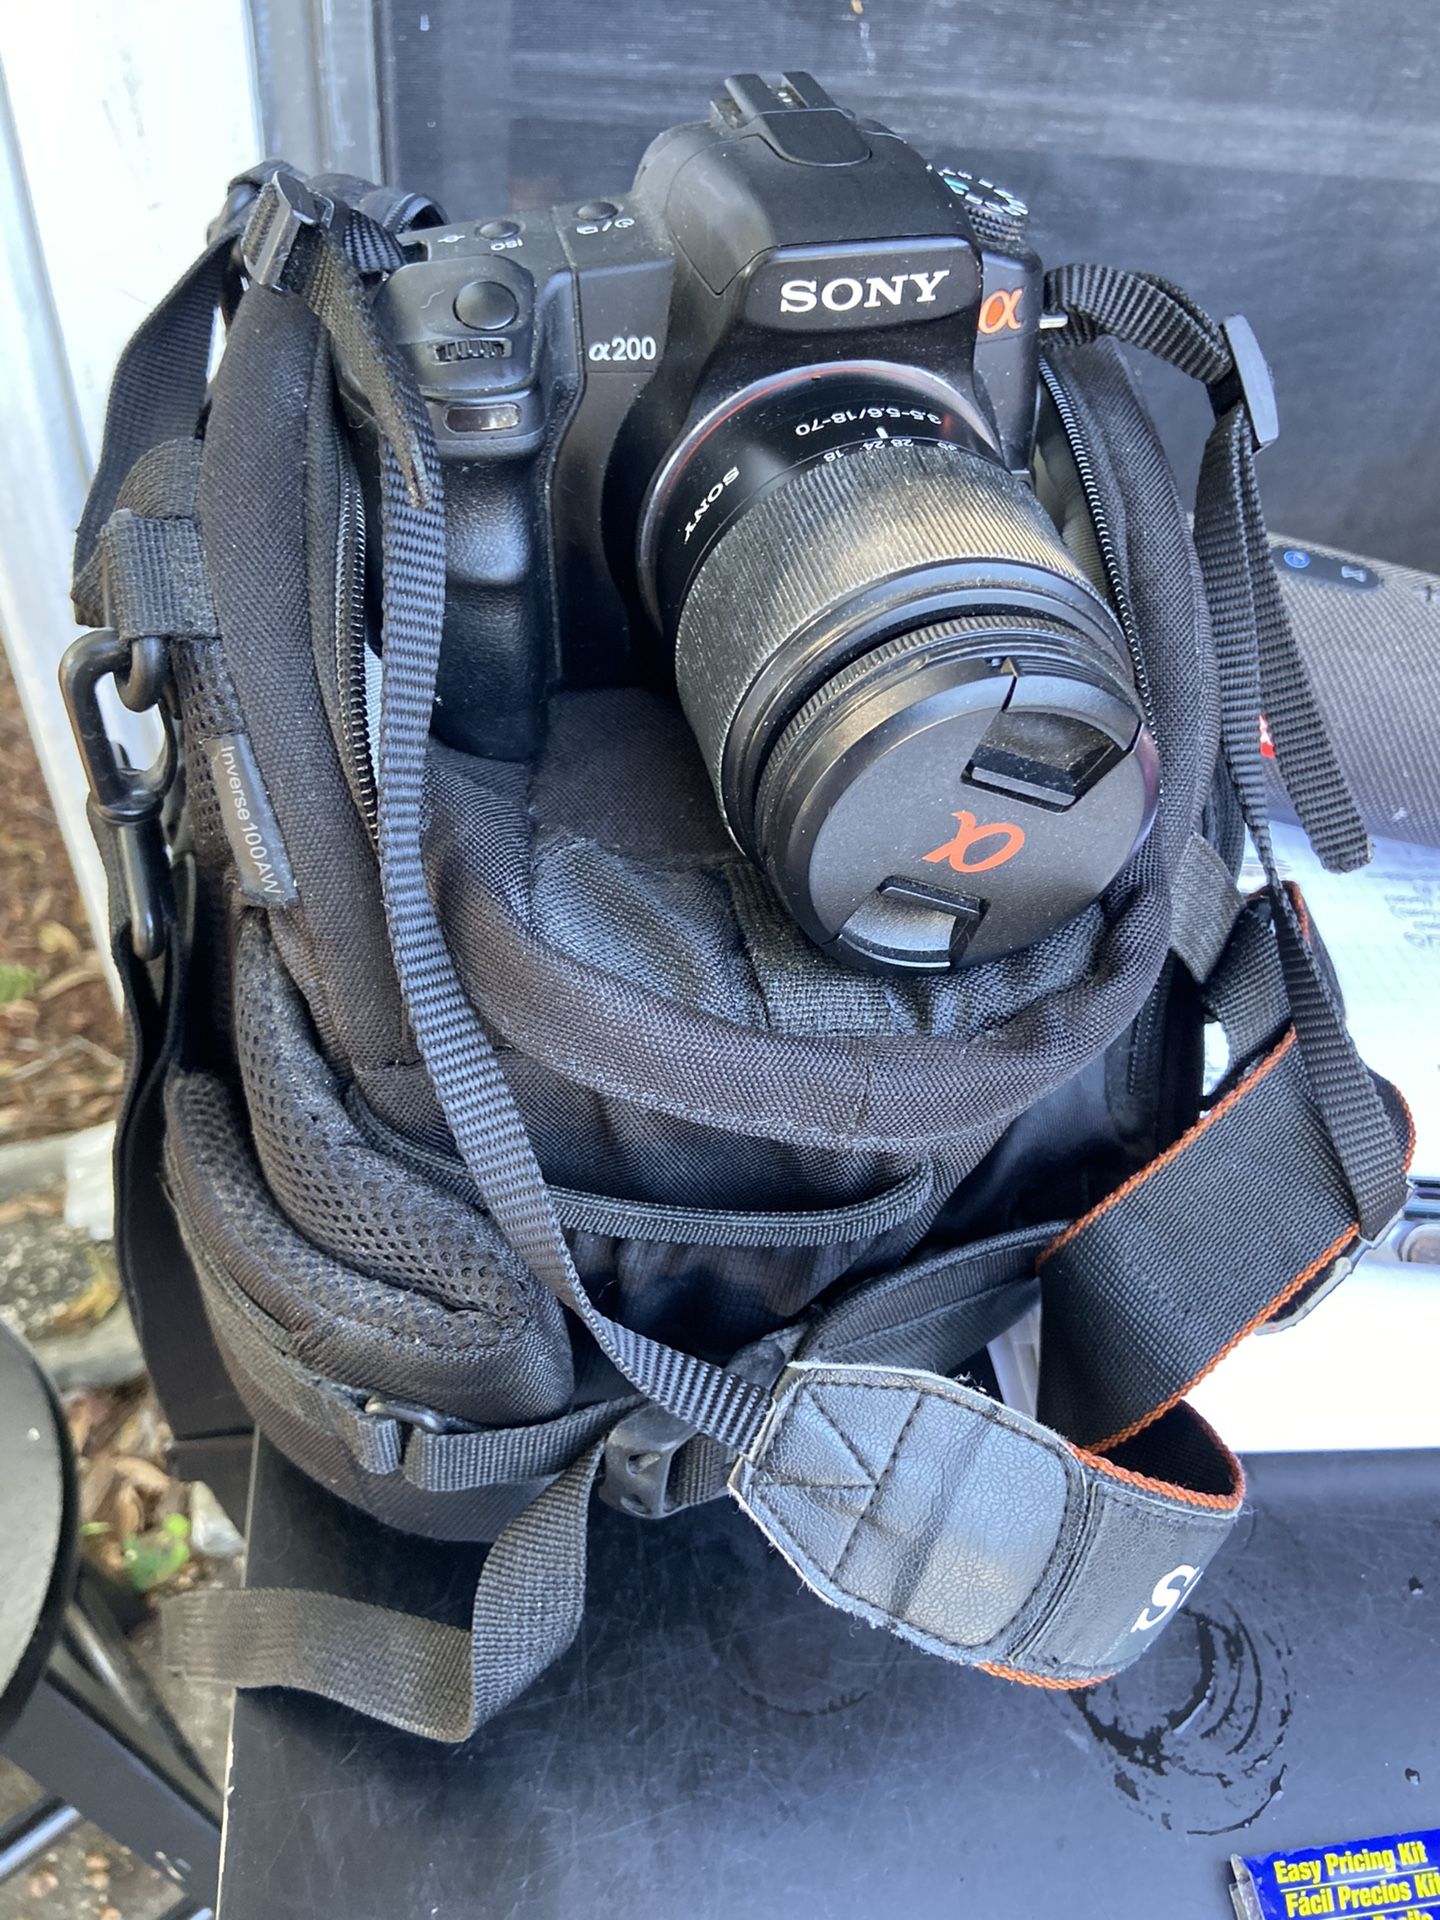 Sony digital camera with bag